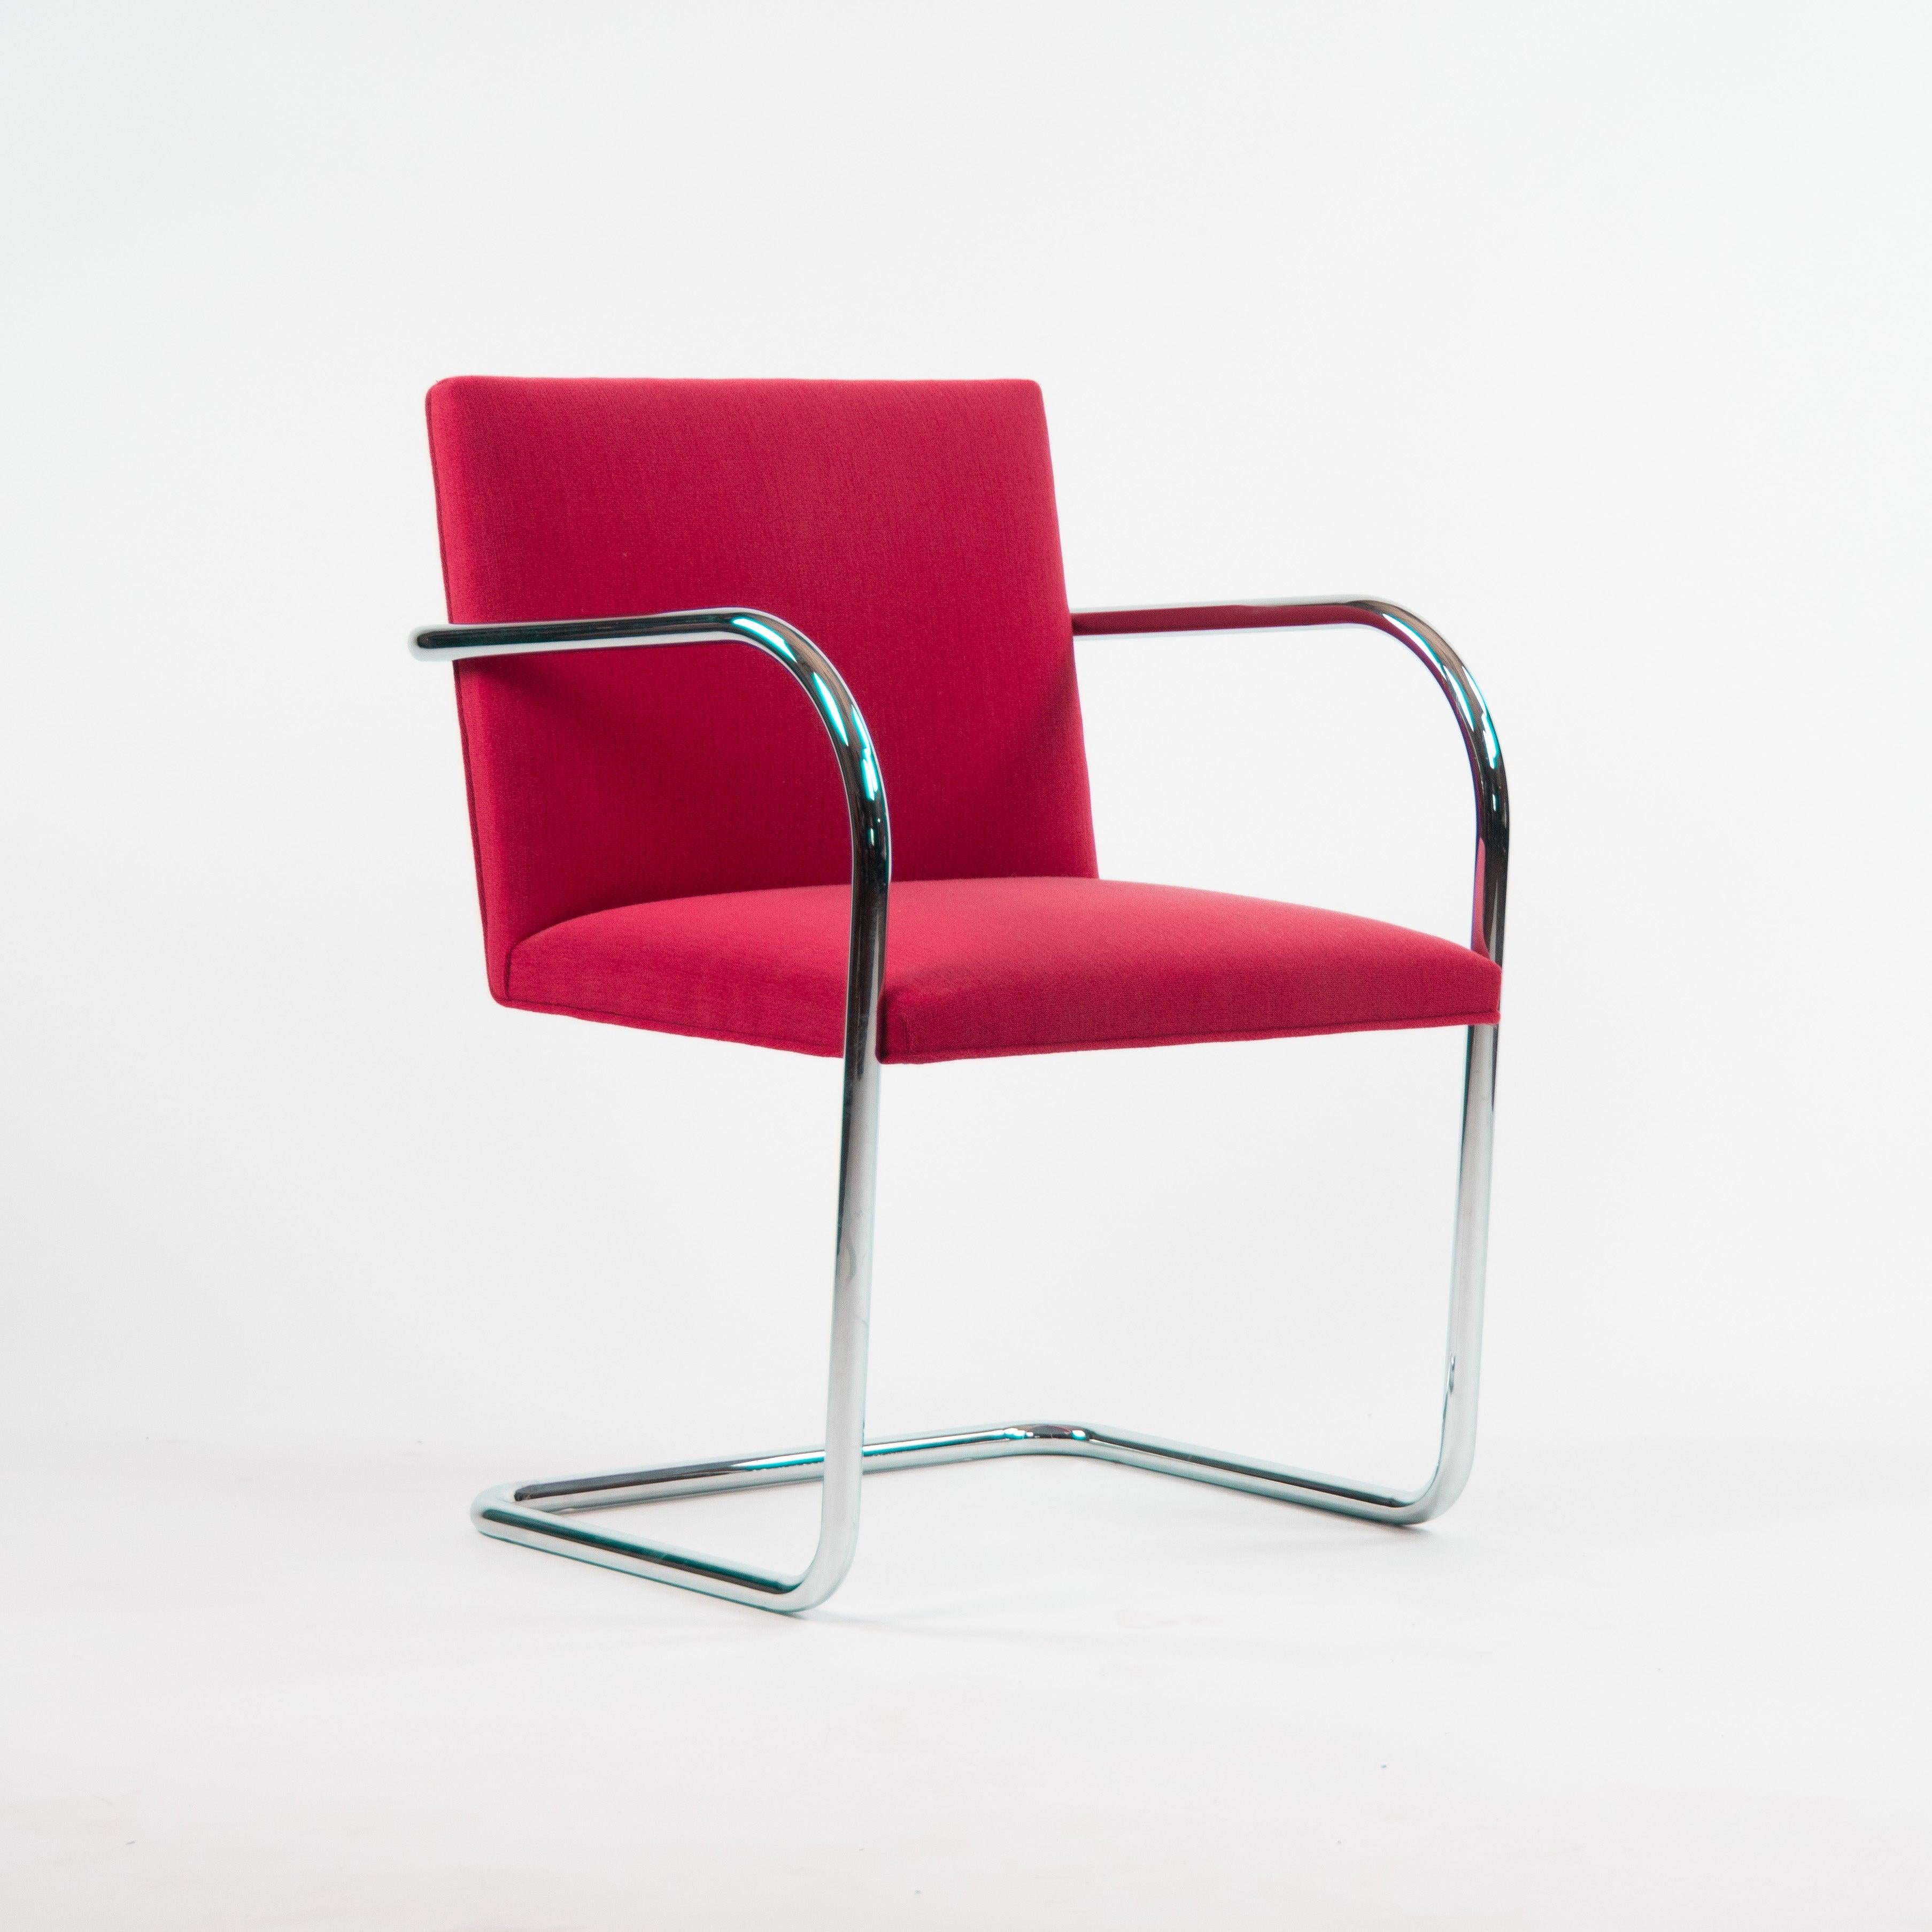 2010 Mies van der Rohe for Knoll Brno Tubular Chrome Dining / Arm Chairs For Sale 2